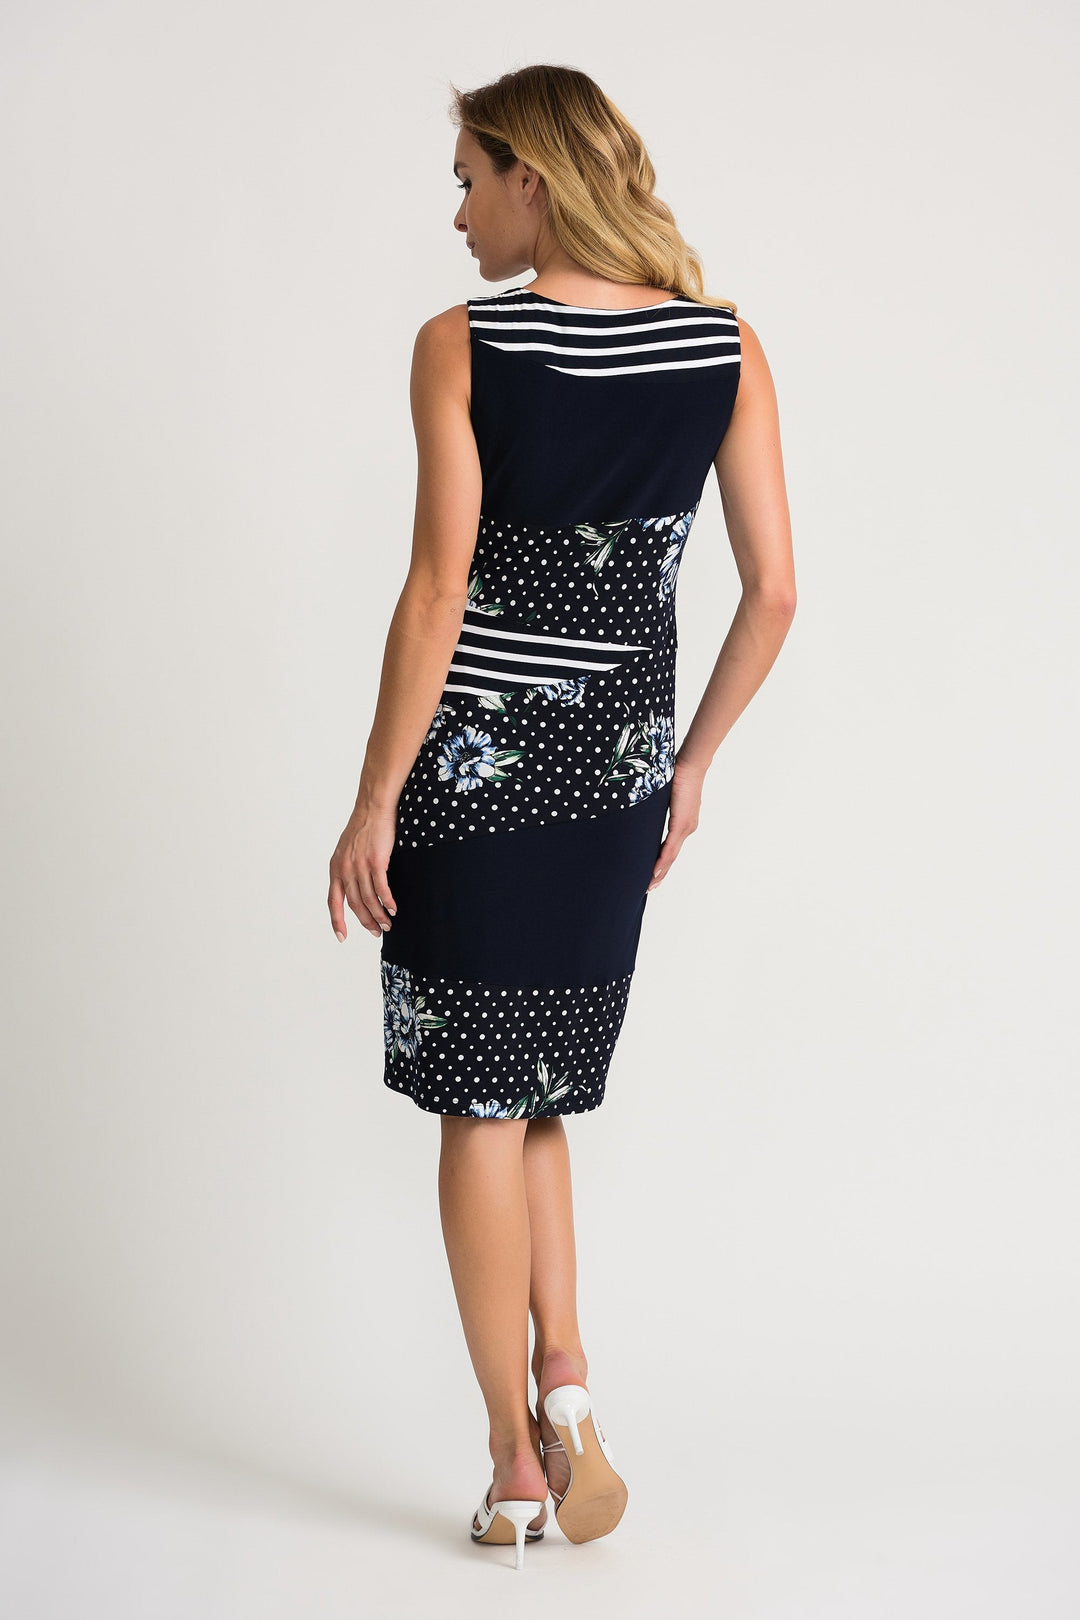 Joseph Ribkoff Dress Style 202250